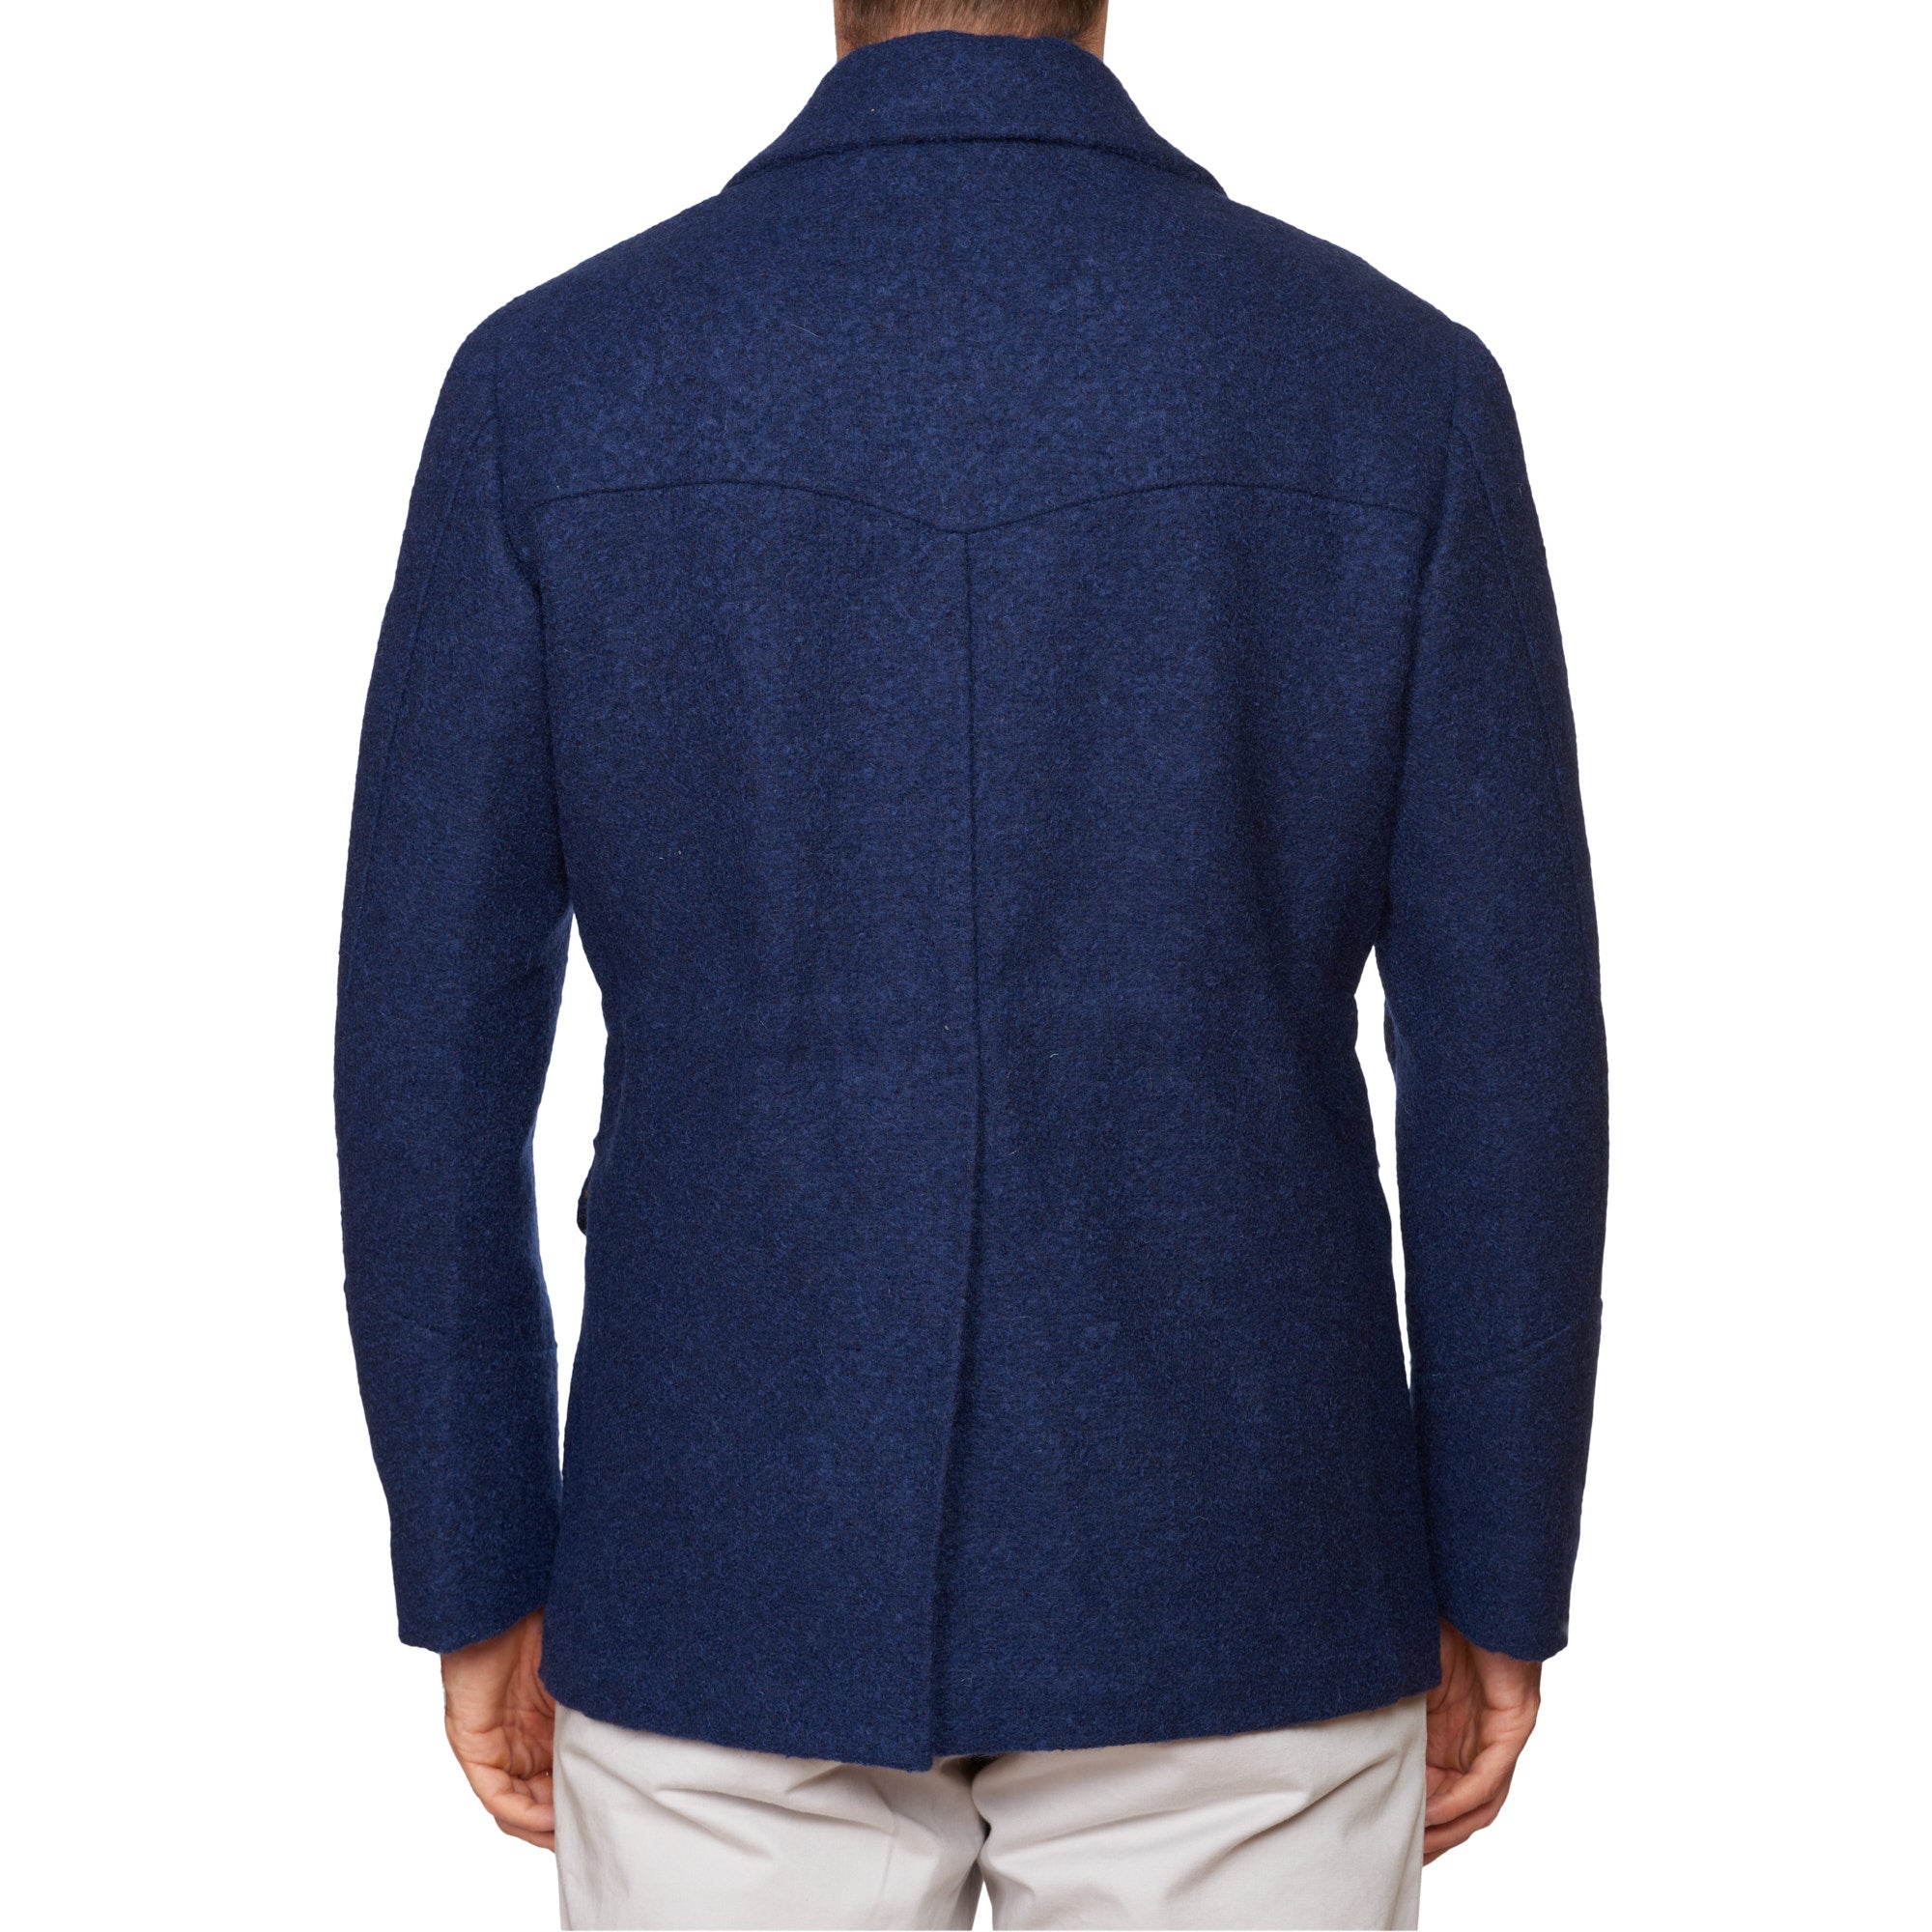 Sartoria CHIAIA Napoli Handmade Bespoke Navy Blue Wool Tweed Coat EU 52 NEW US M L